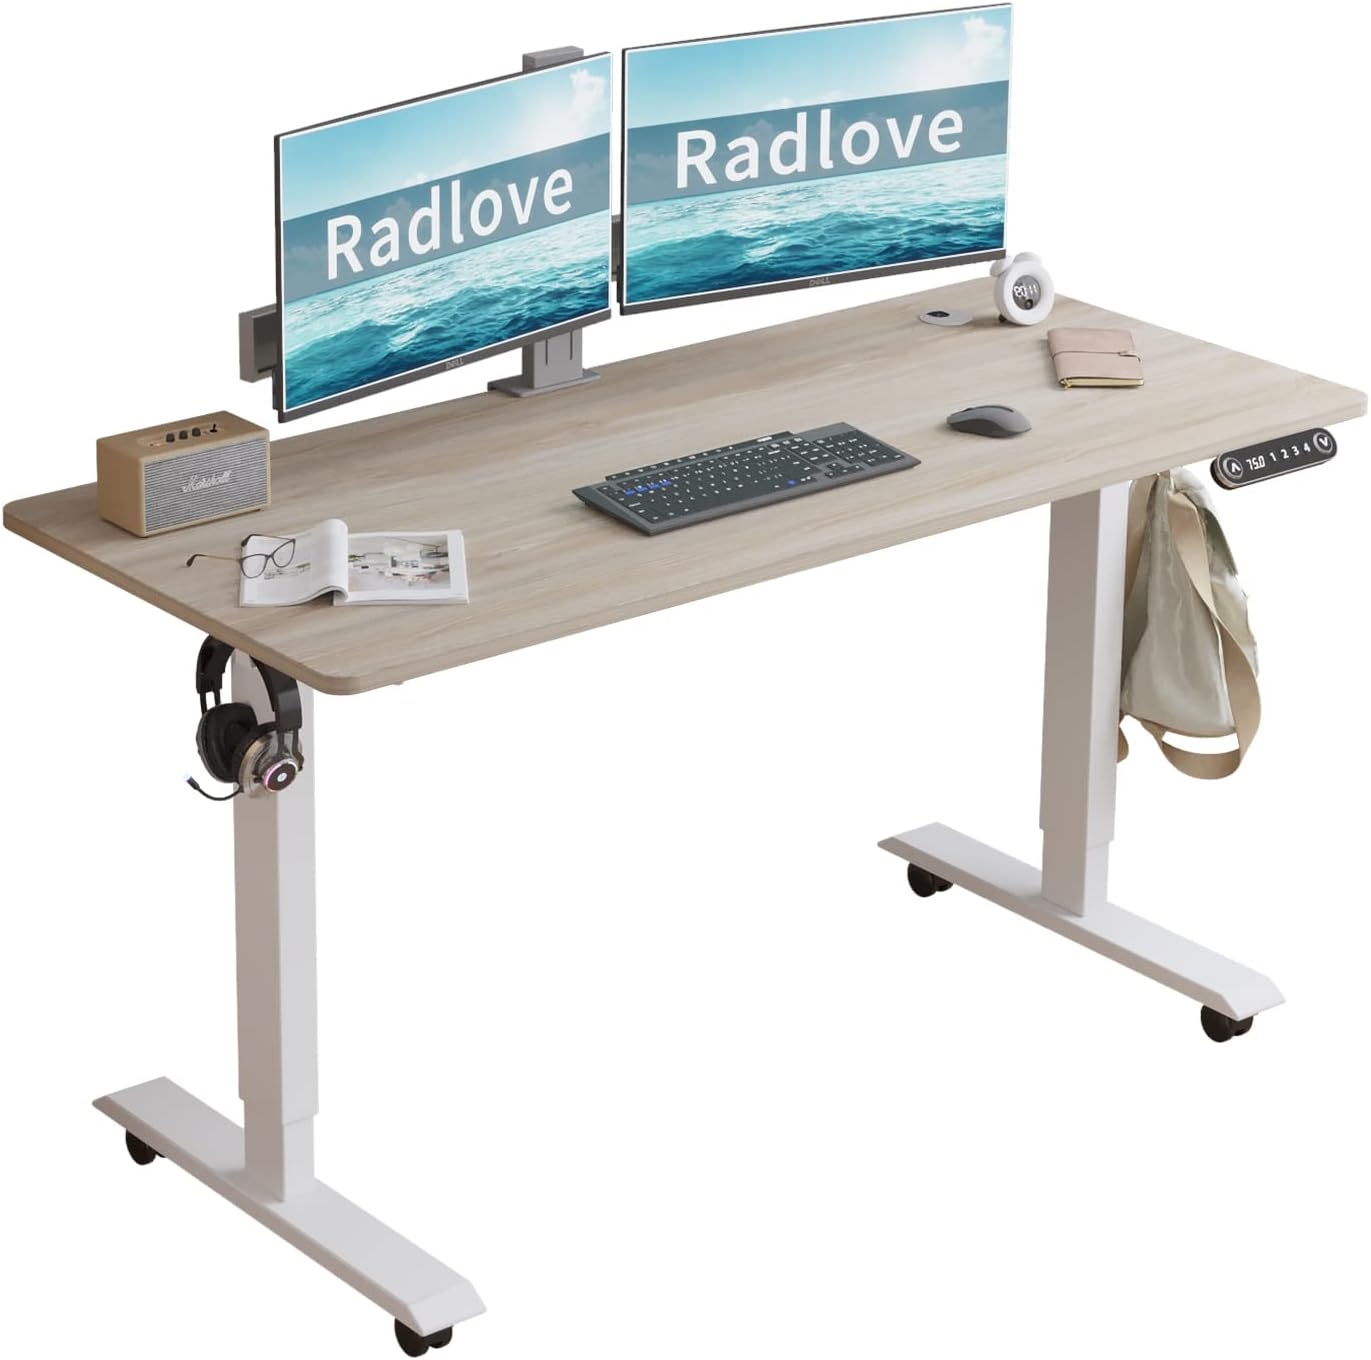 Radlove Electric Standing Desk | DeviceDaily.com